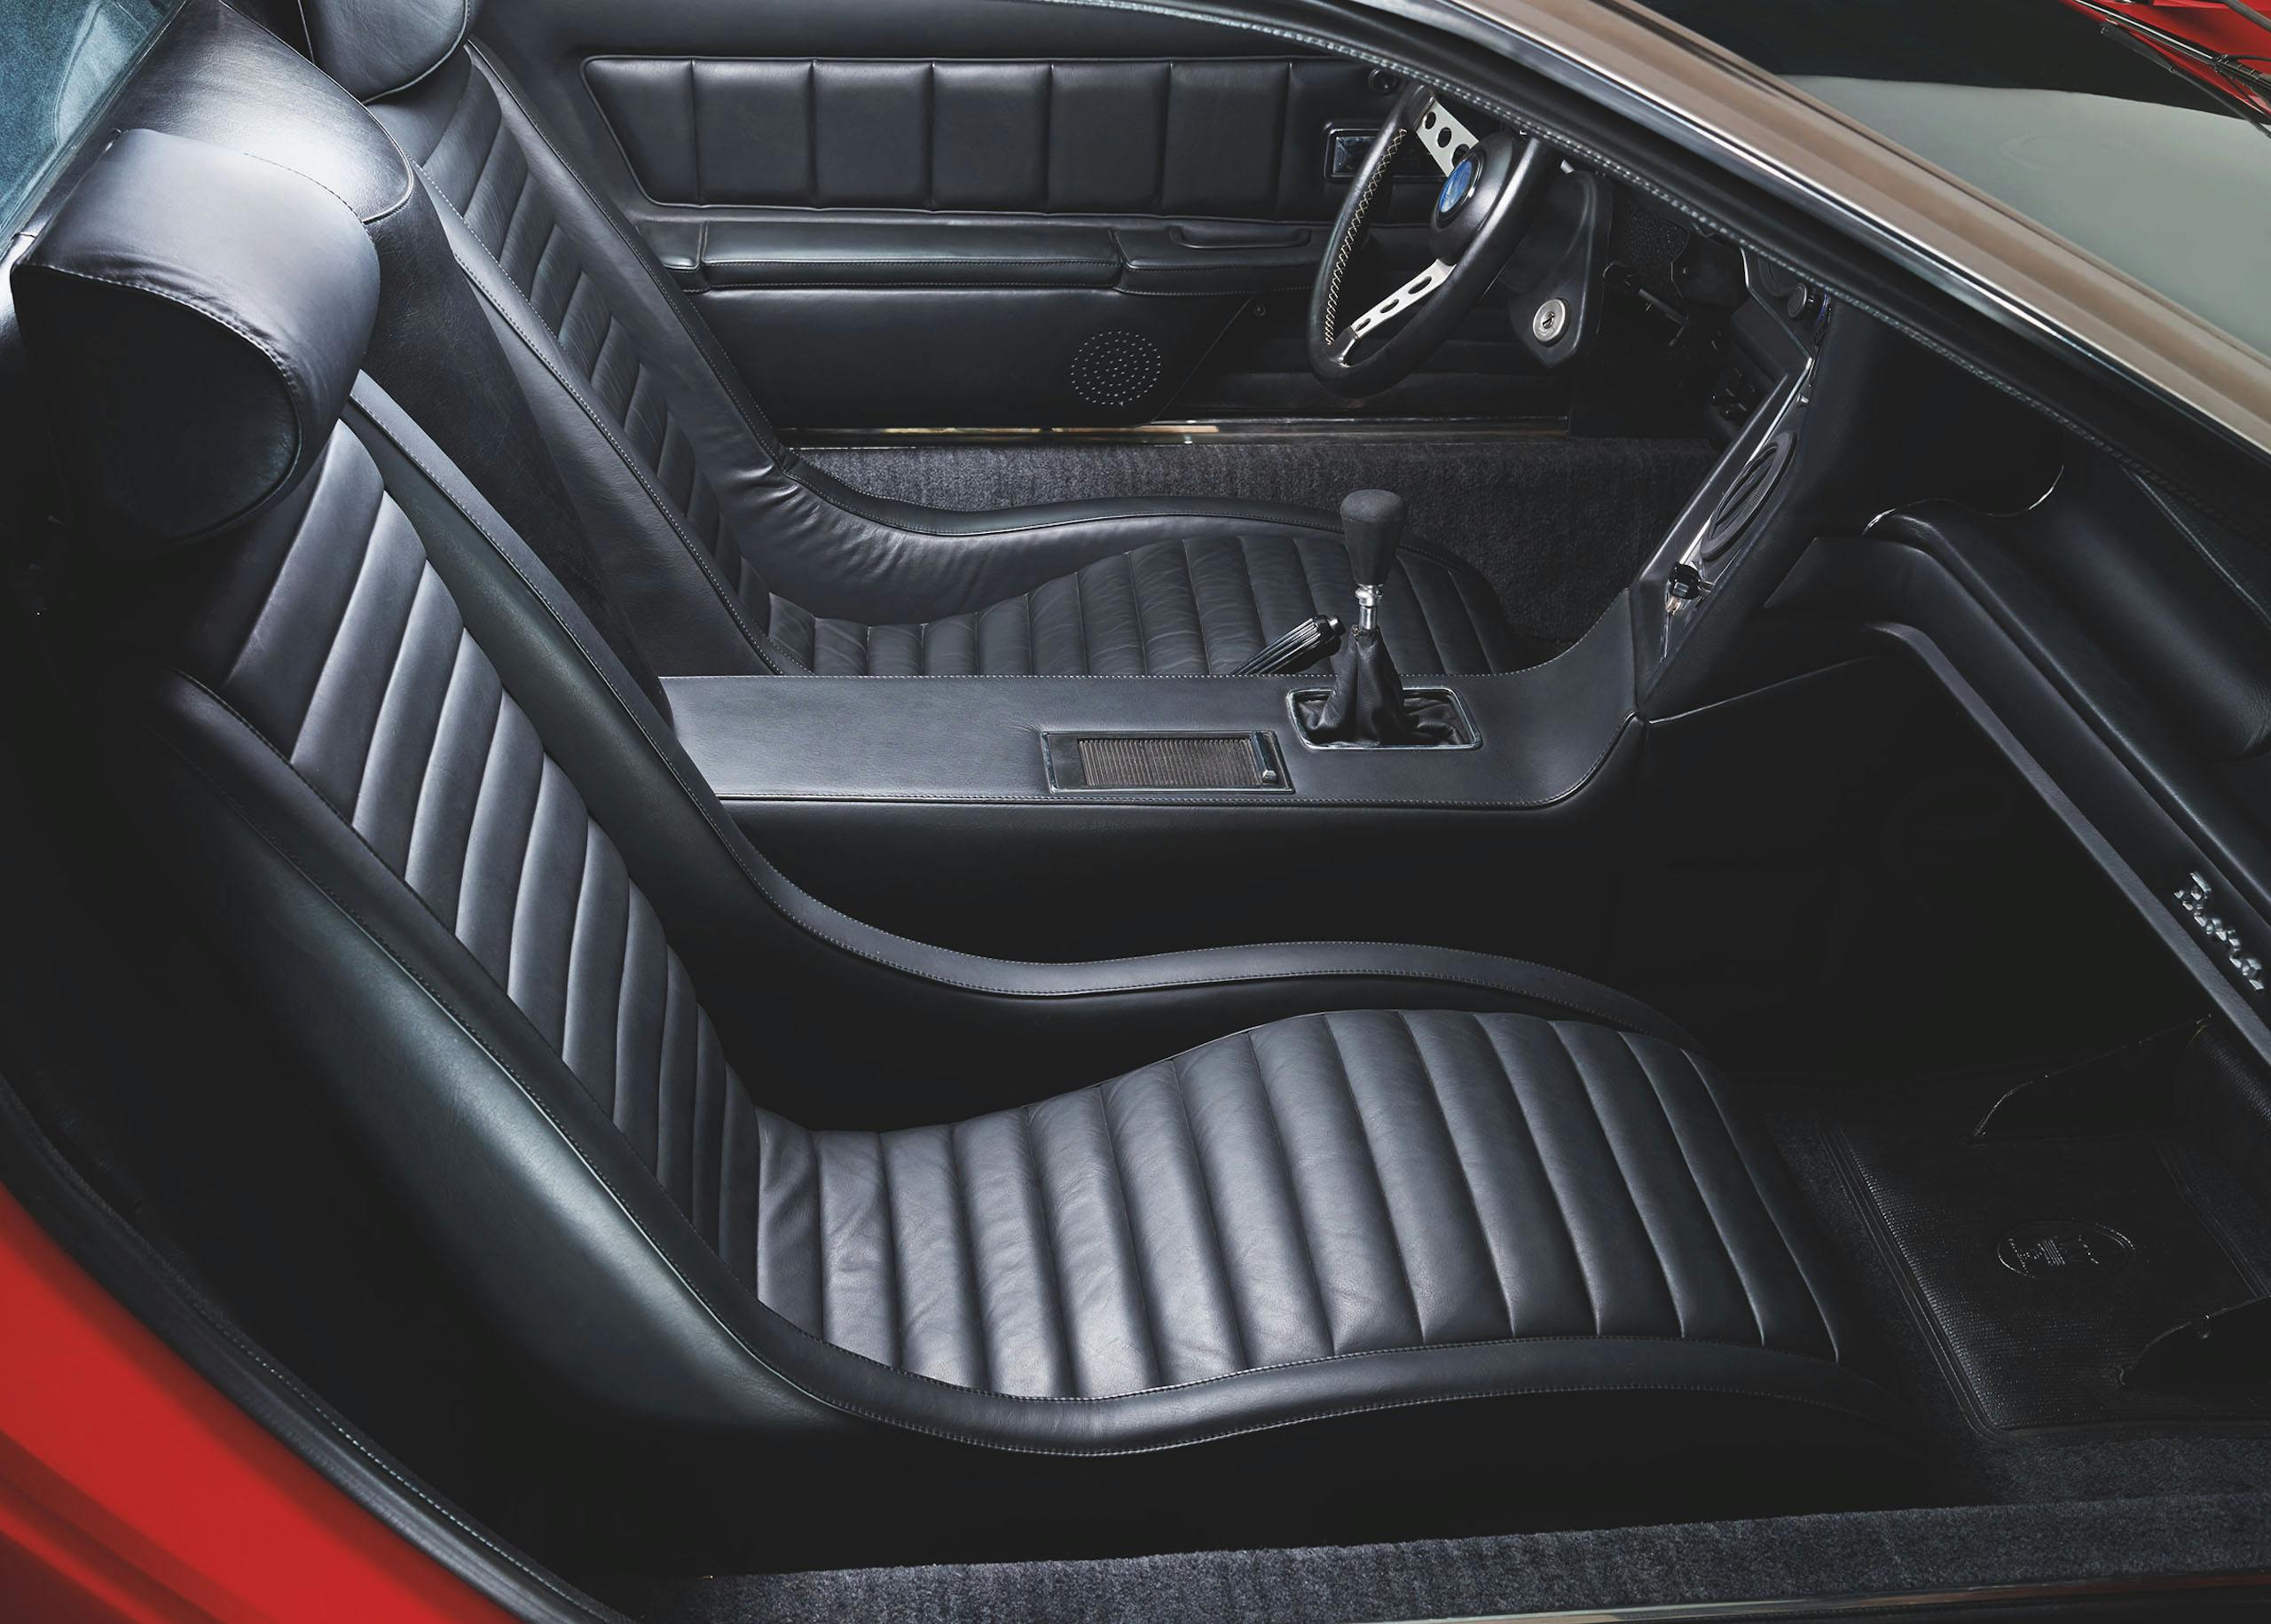 Maserati Bora interior passenger side